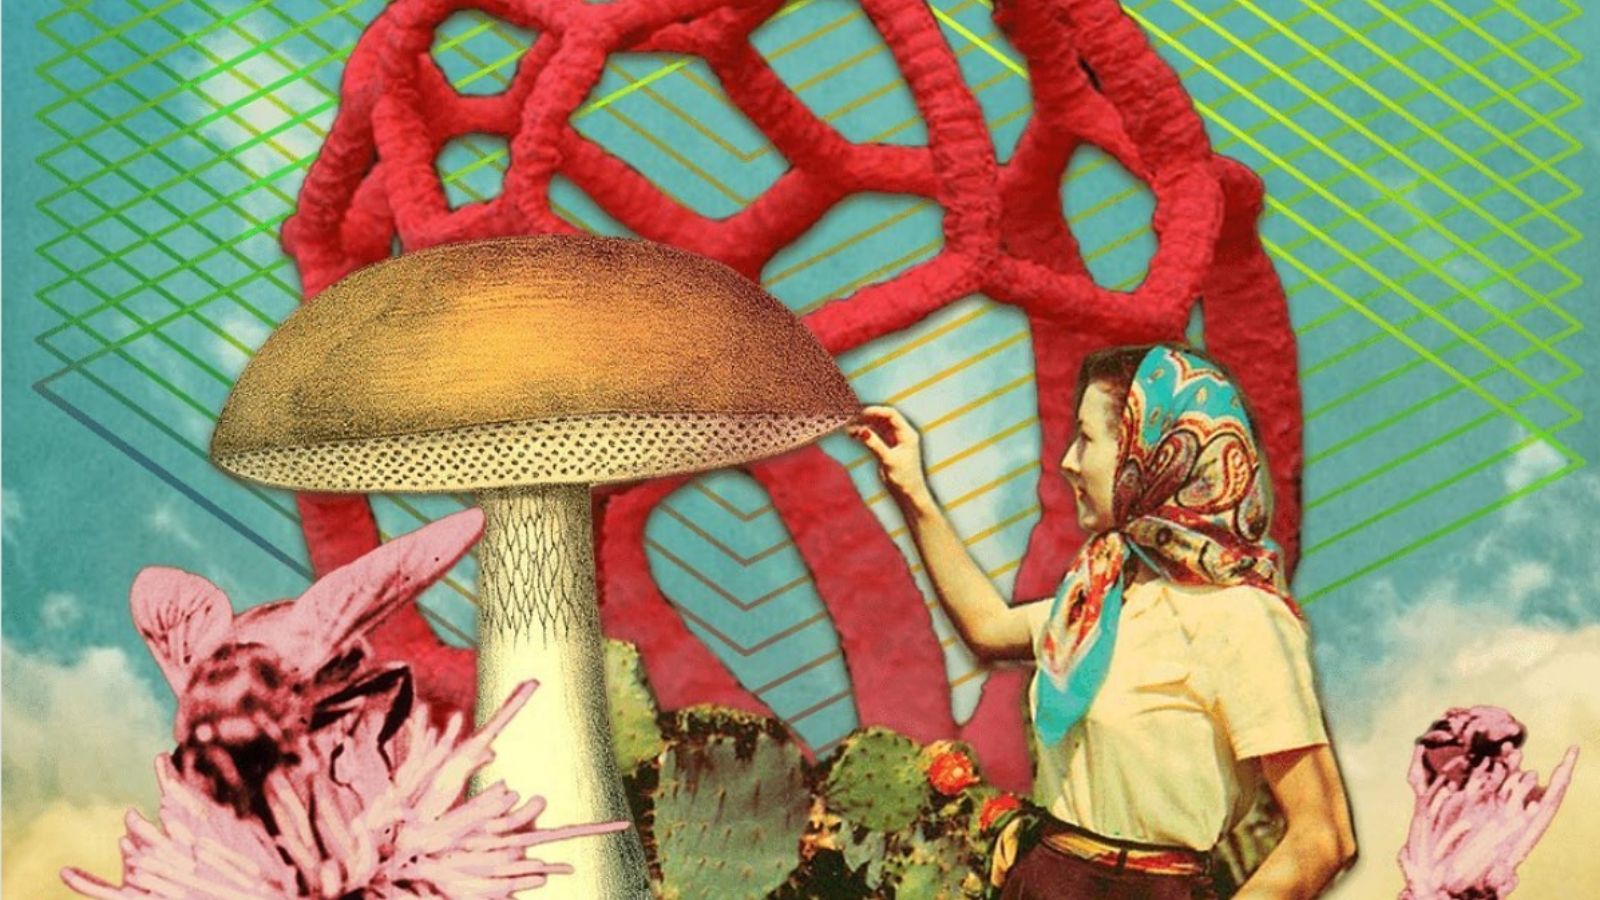 A collage art of a veiled woman touching a magic mushroom.